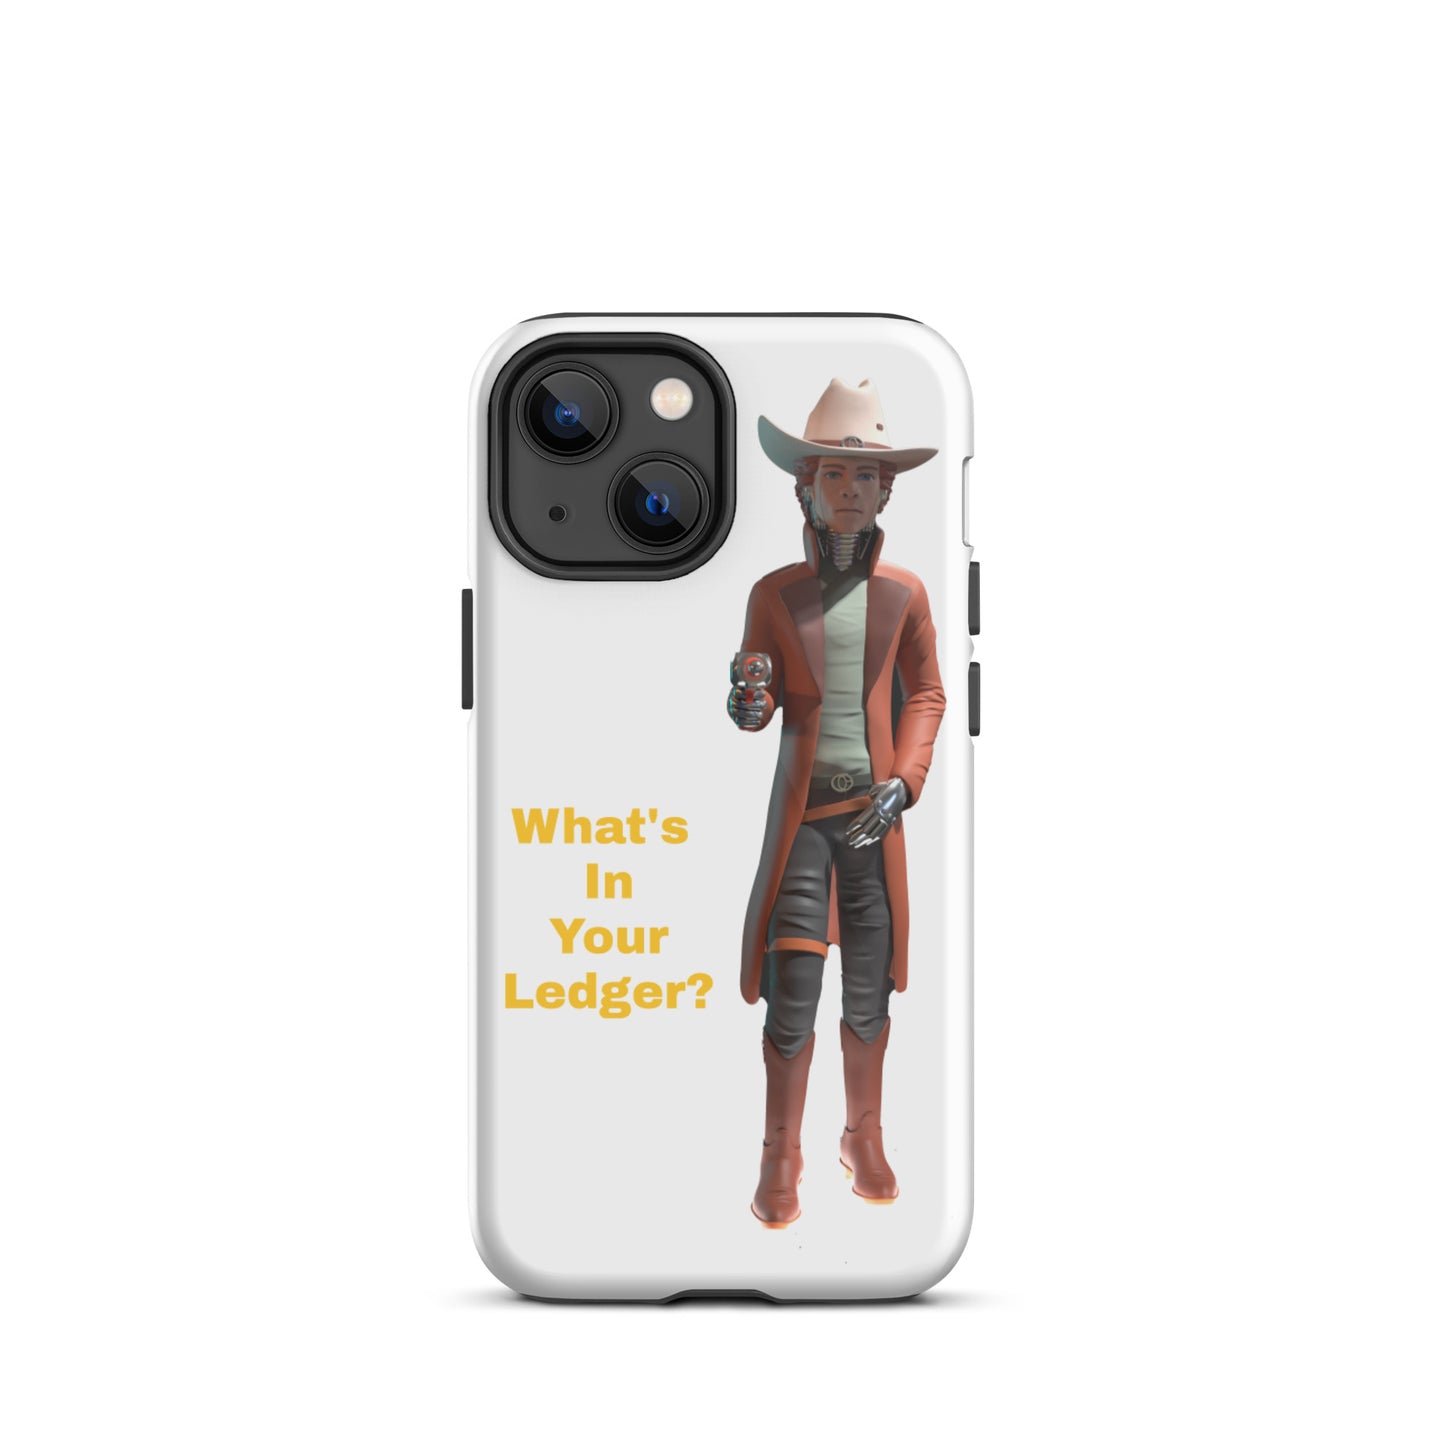 Zero-G iPhone case